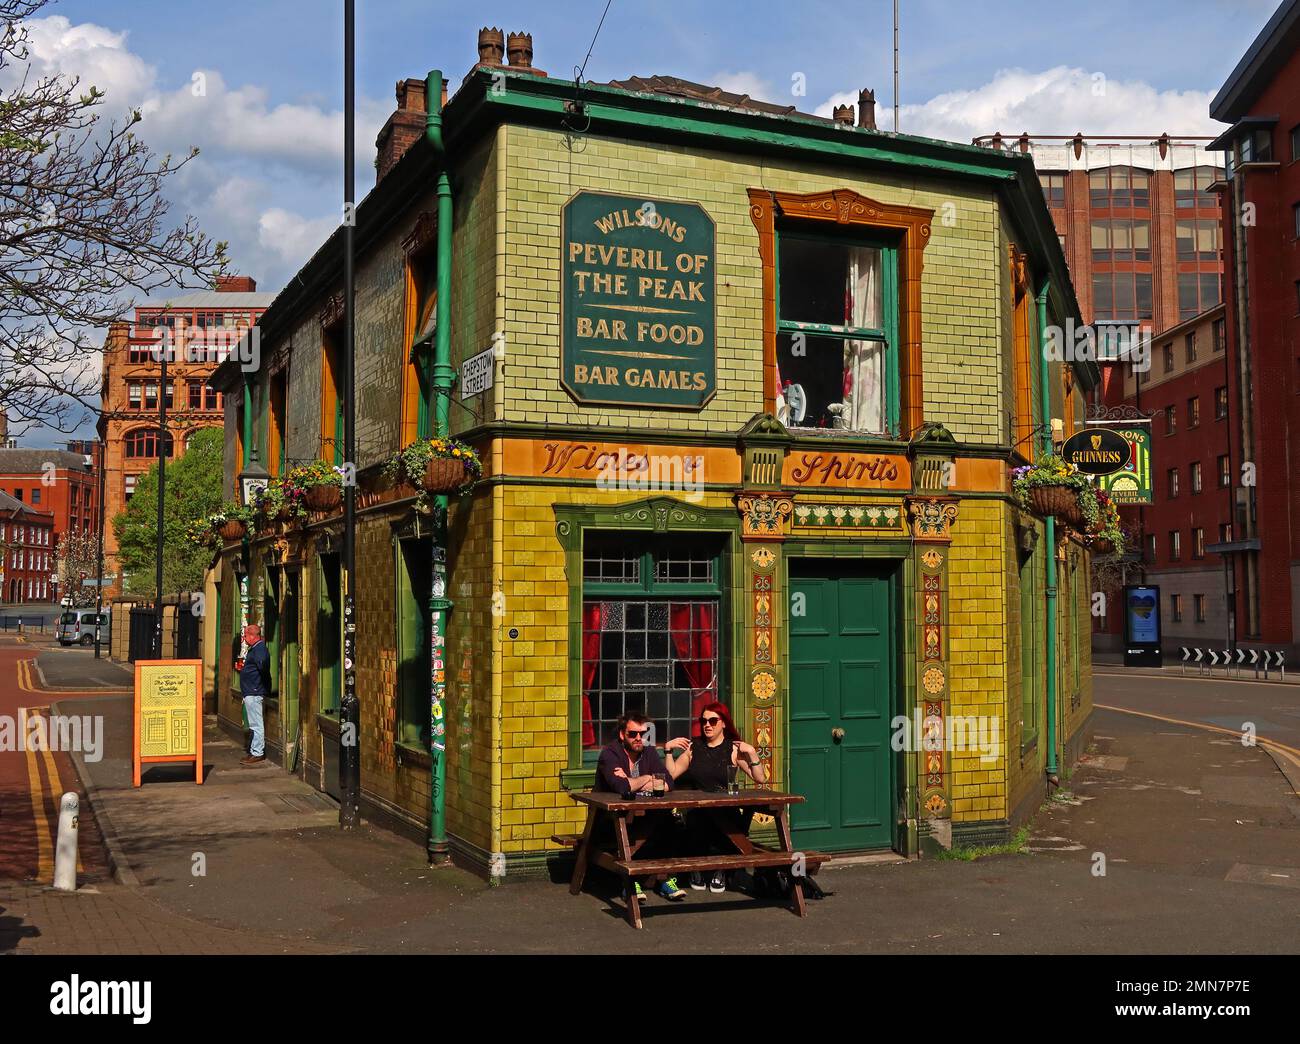 Manchesters Iconic pub - The Peveril of the Peak, bar en carrelage vert au 127 Great Bridgewater St, Manchester, Angleterre, Royaume-Uni, M1 5JQ Banque D'Images